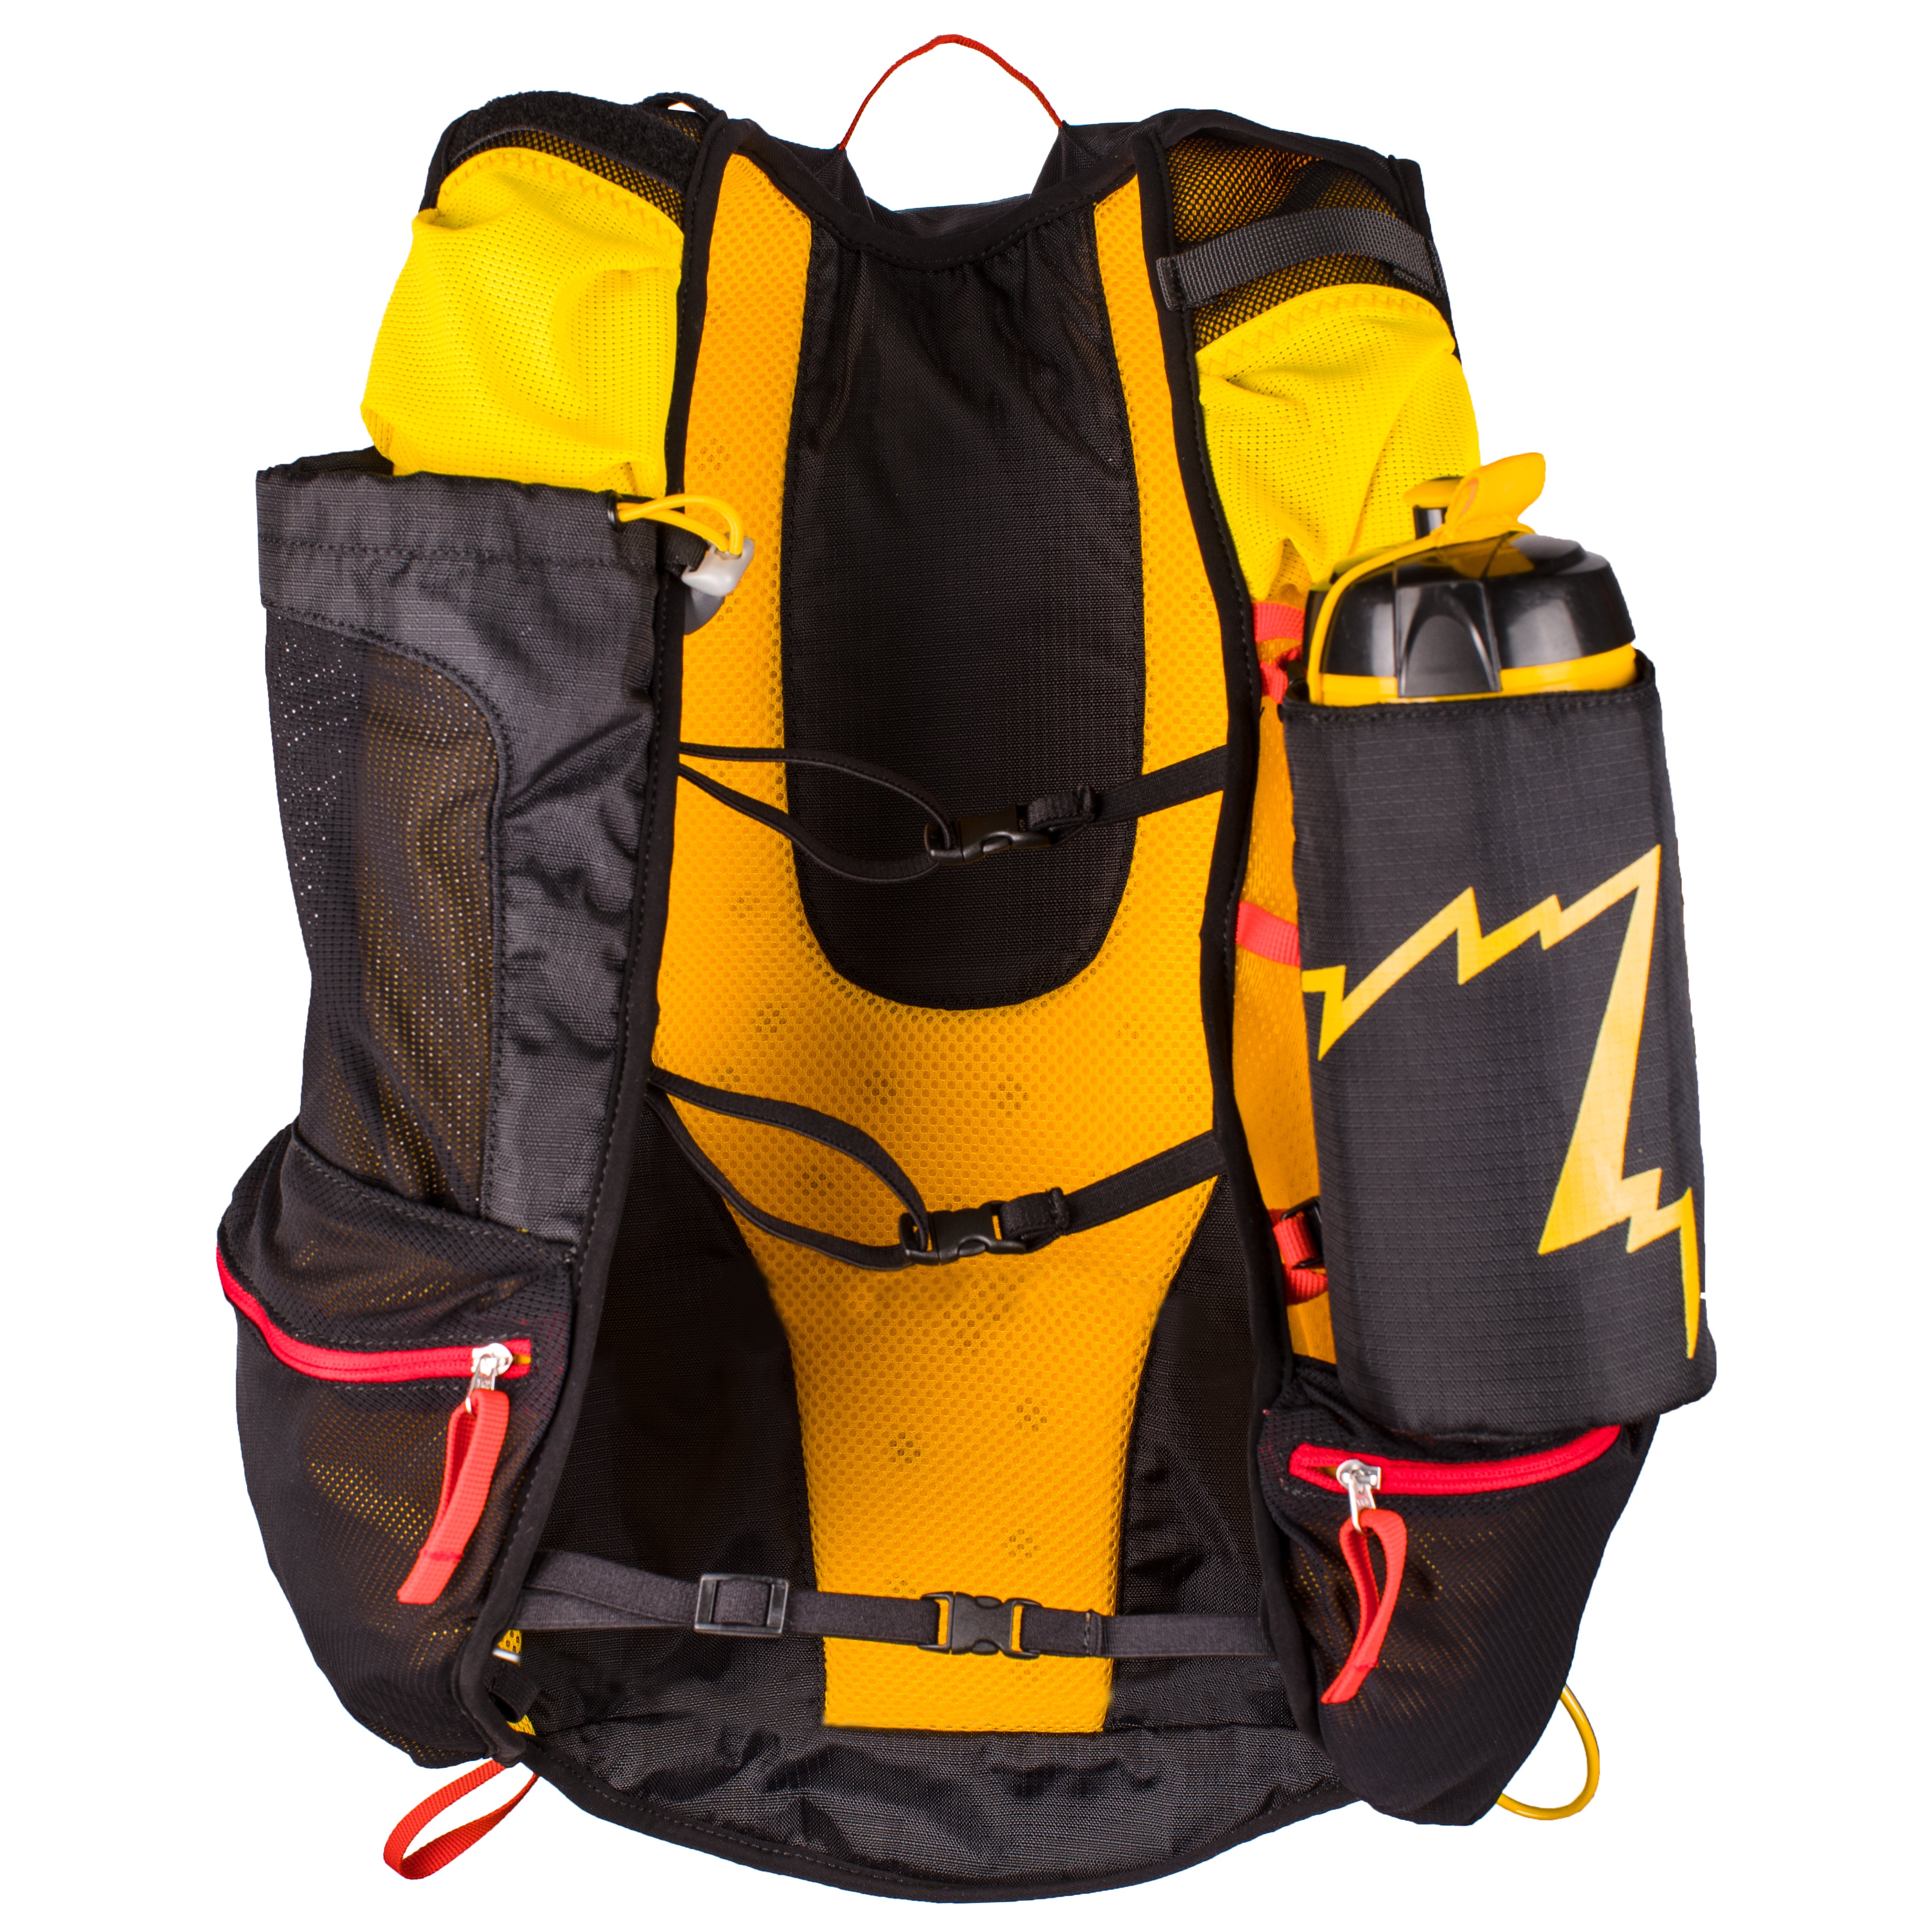 La Sportiva Course Backpack-Ski touring backpack